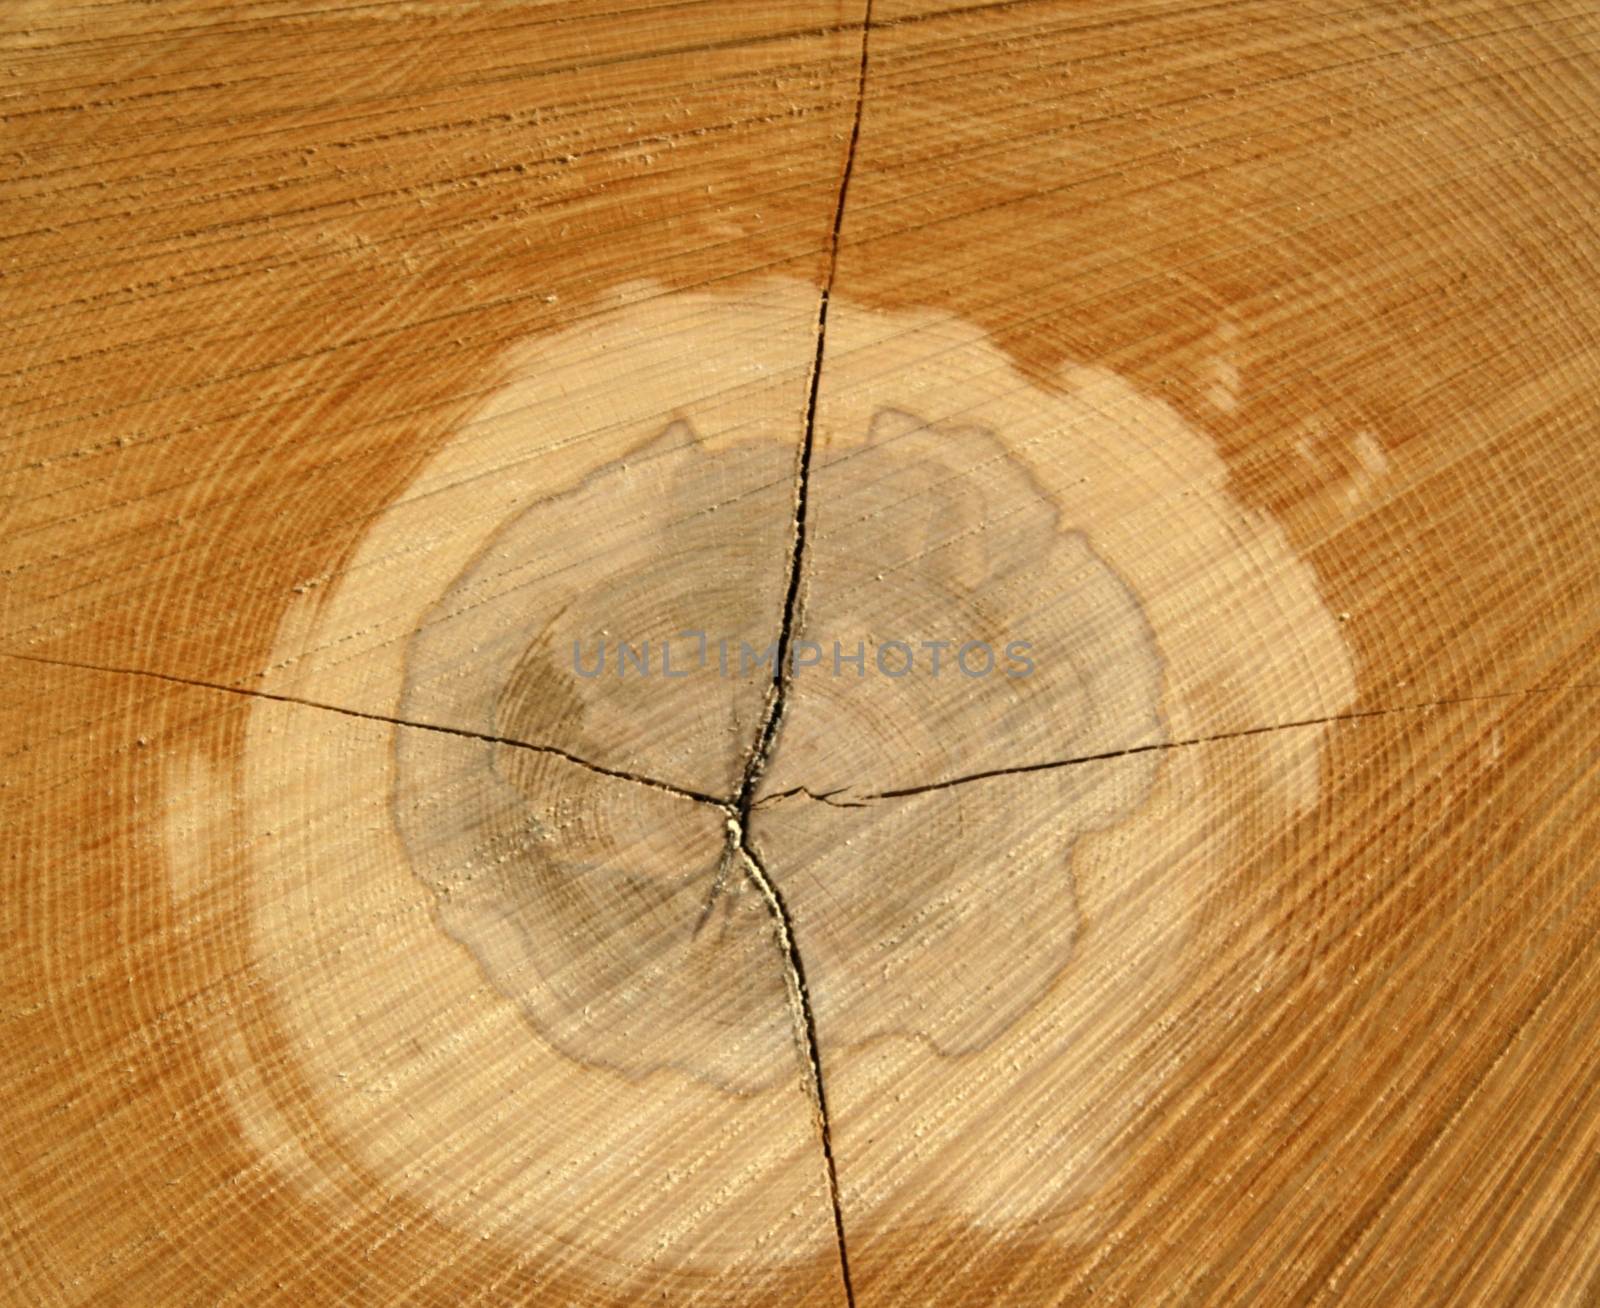 The slice of wood timber,detail,macro by jnerad